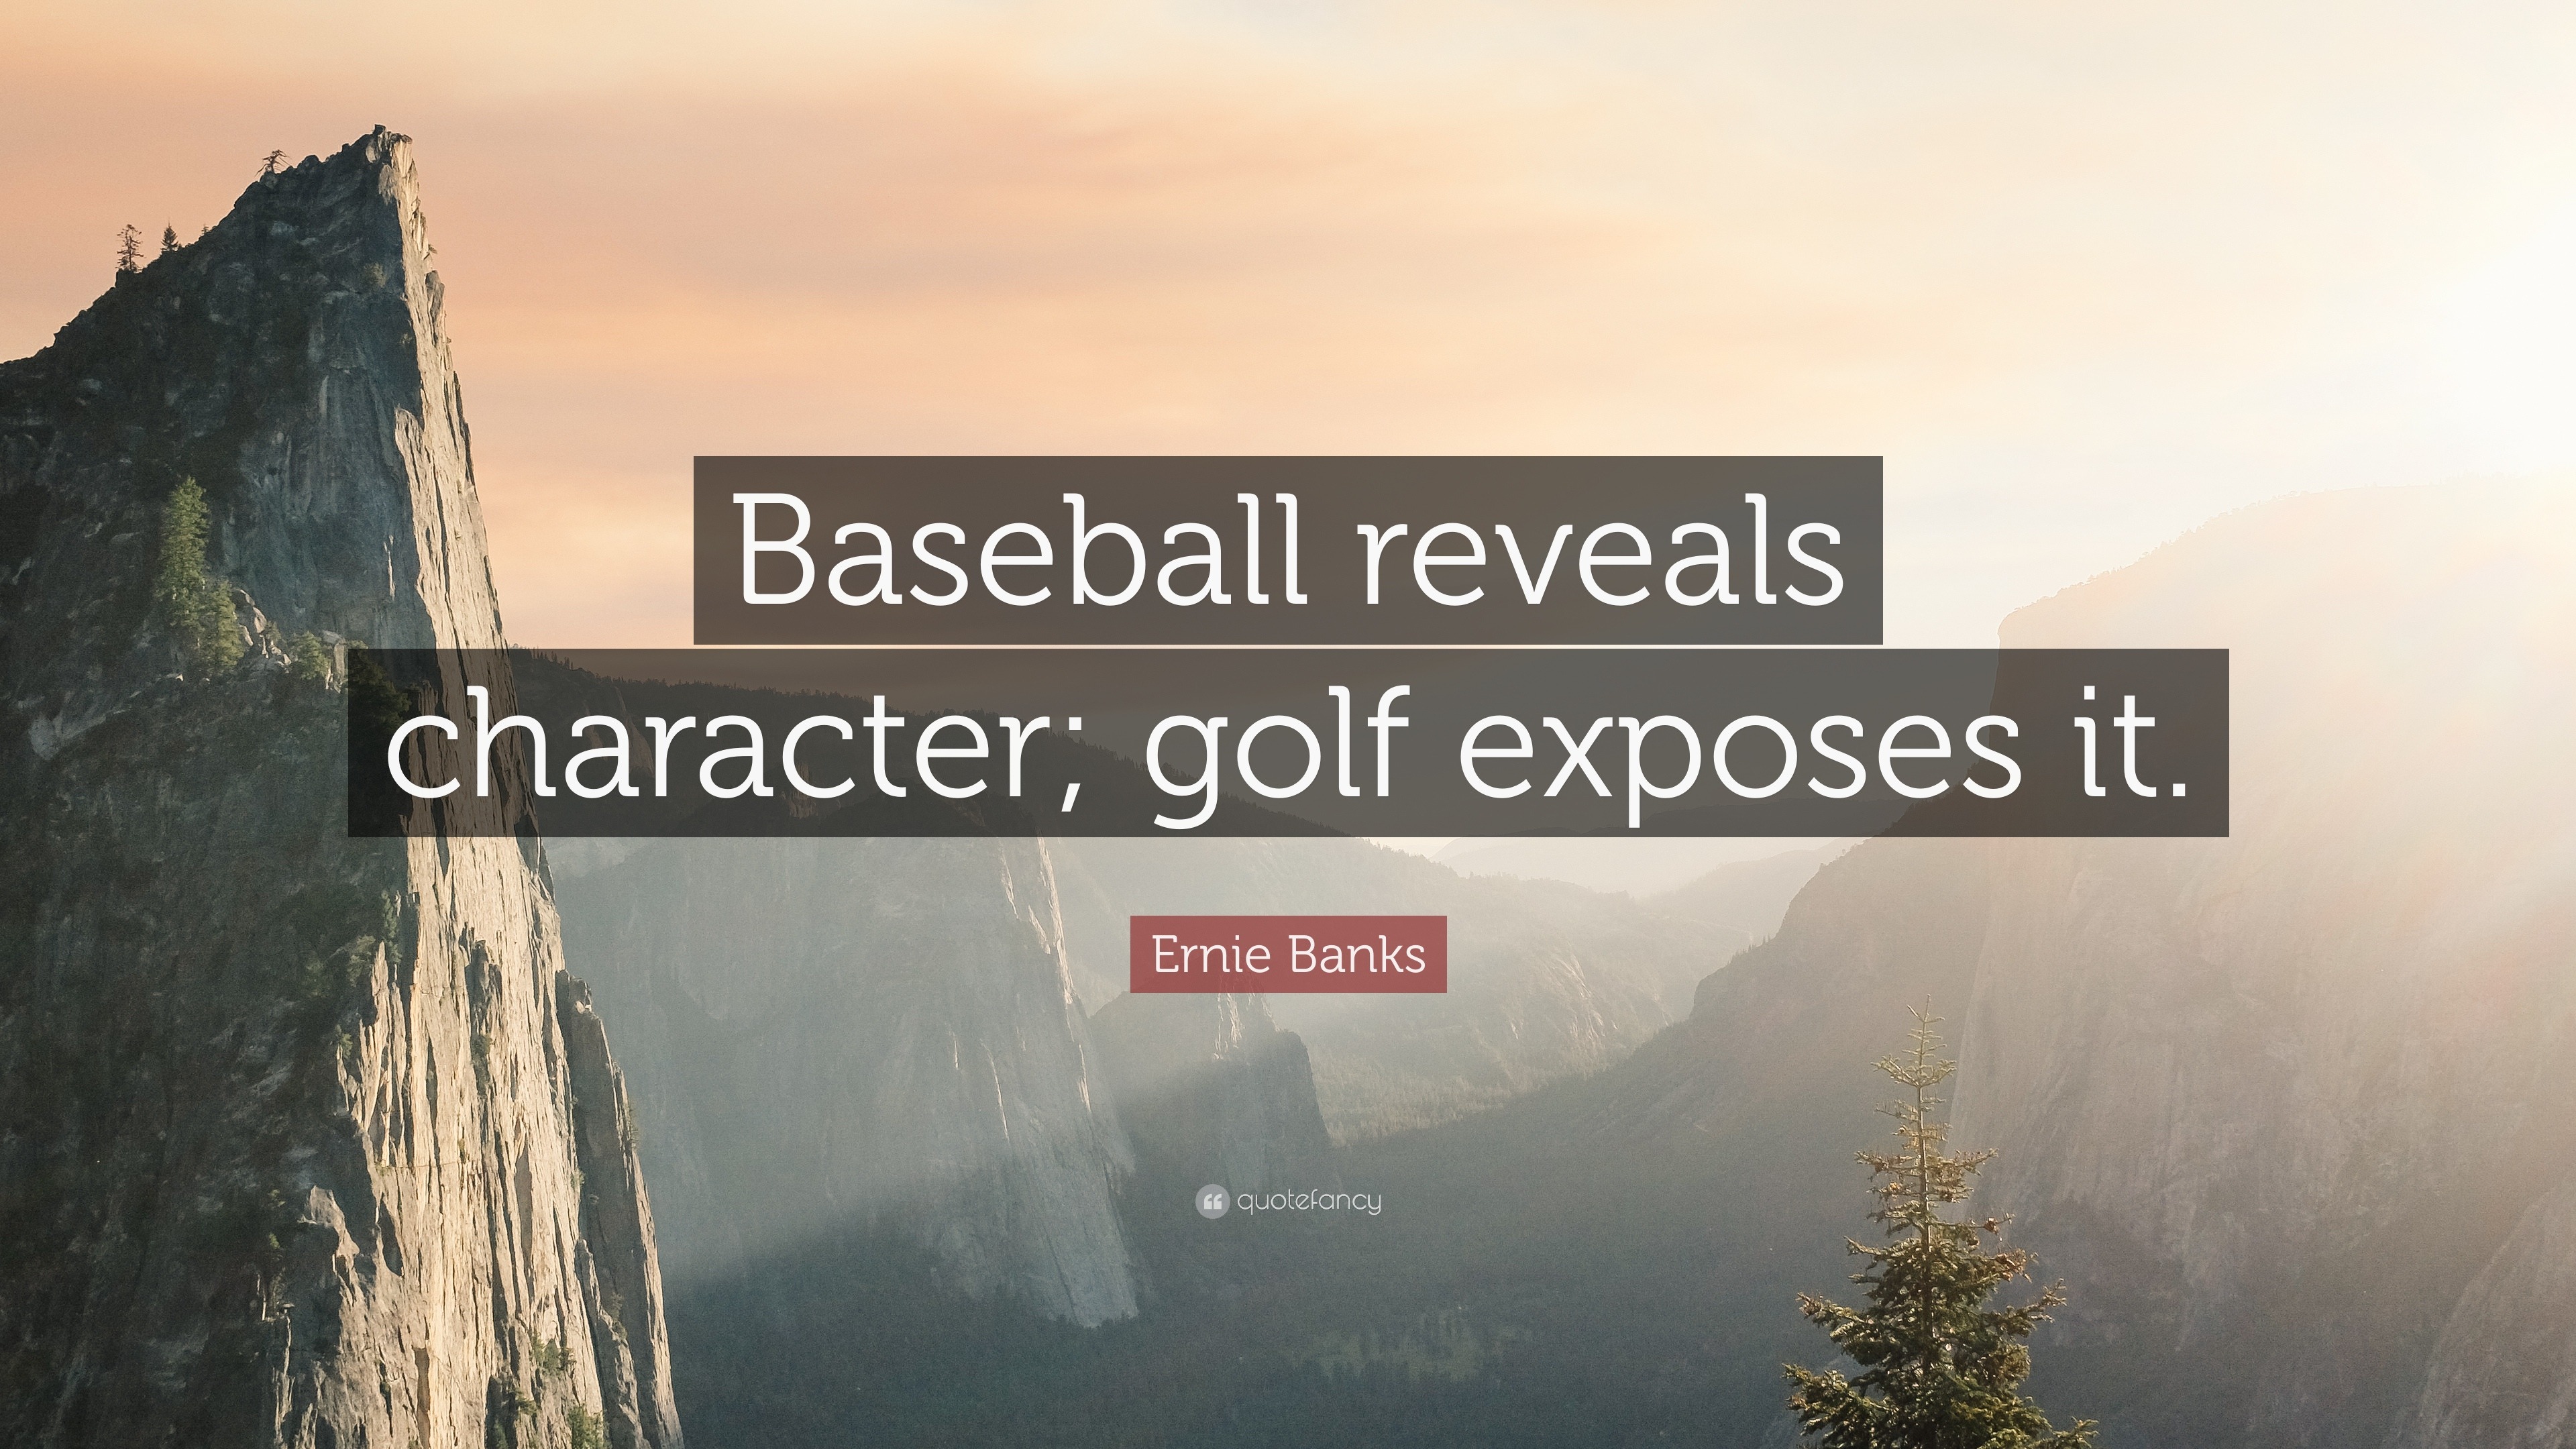 Ernie Banks Famous Quotes. QuotesGram